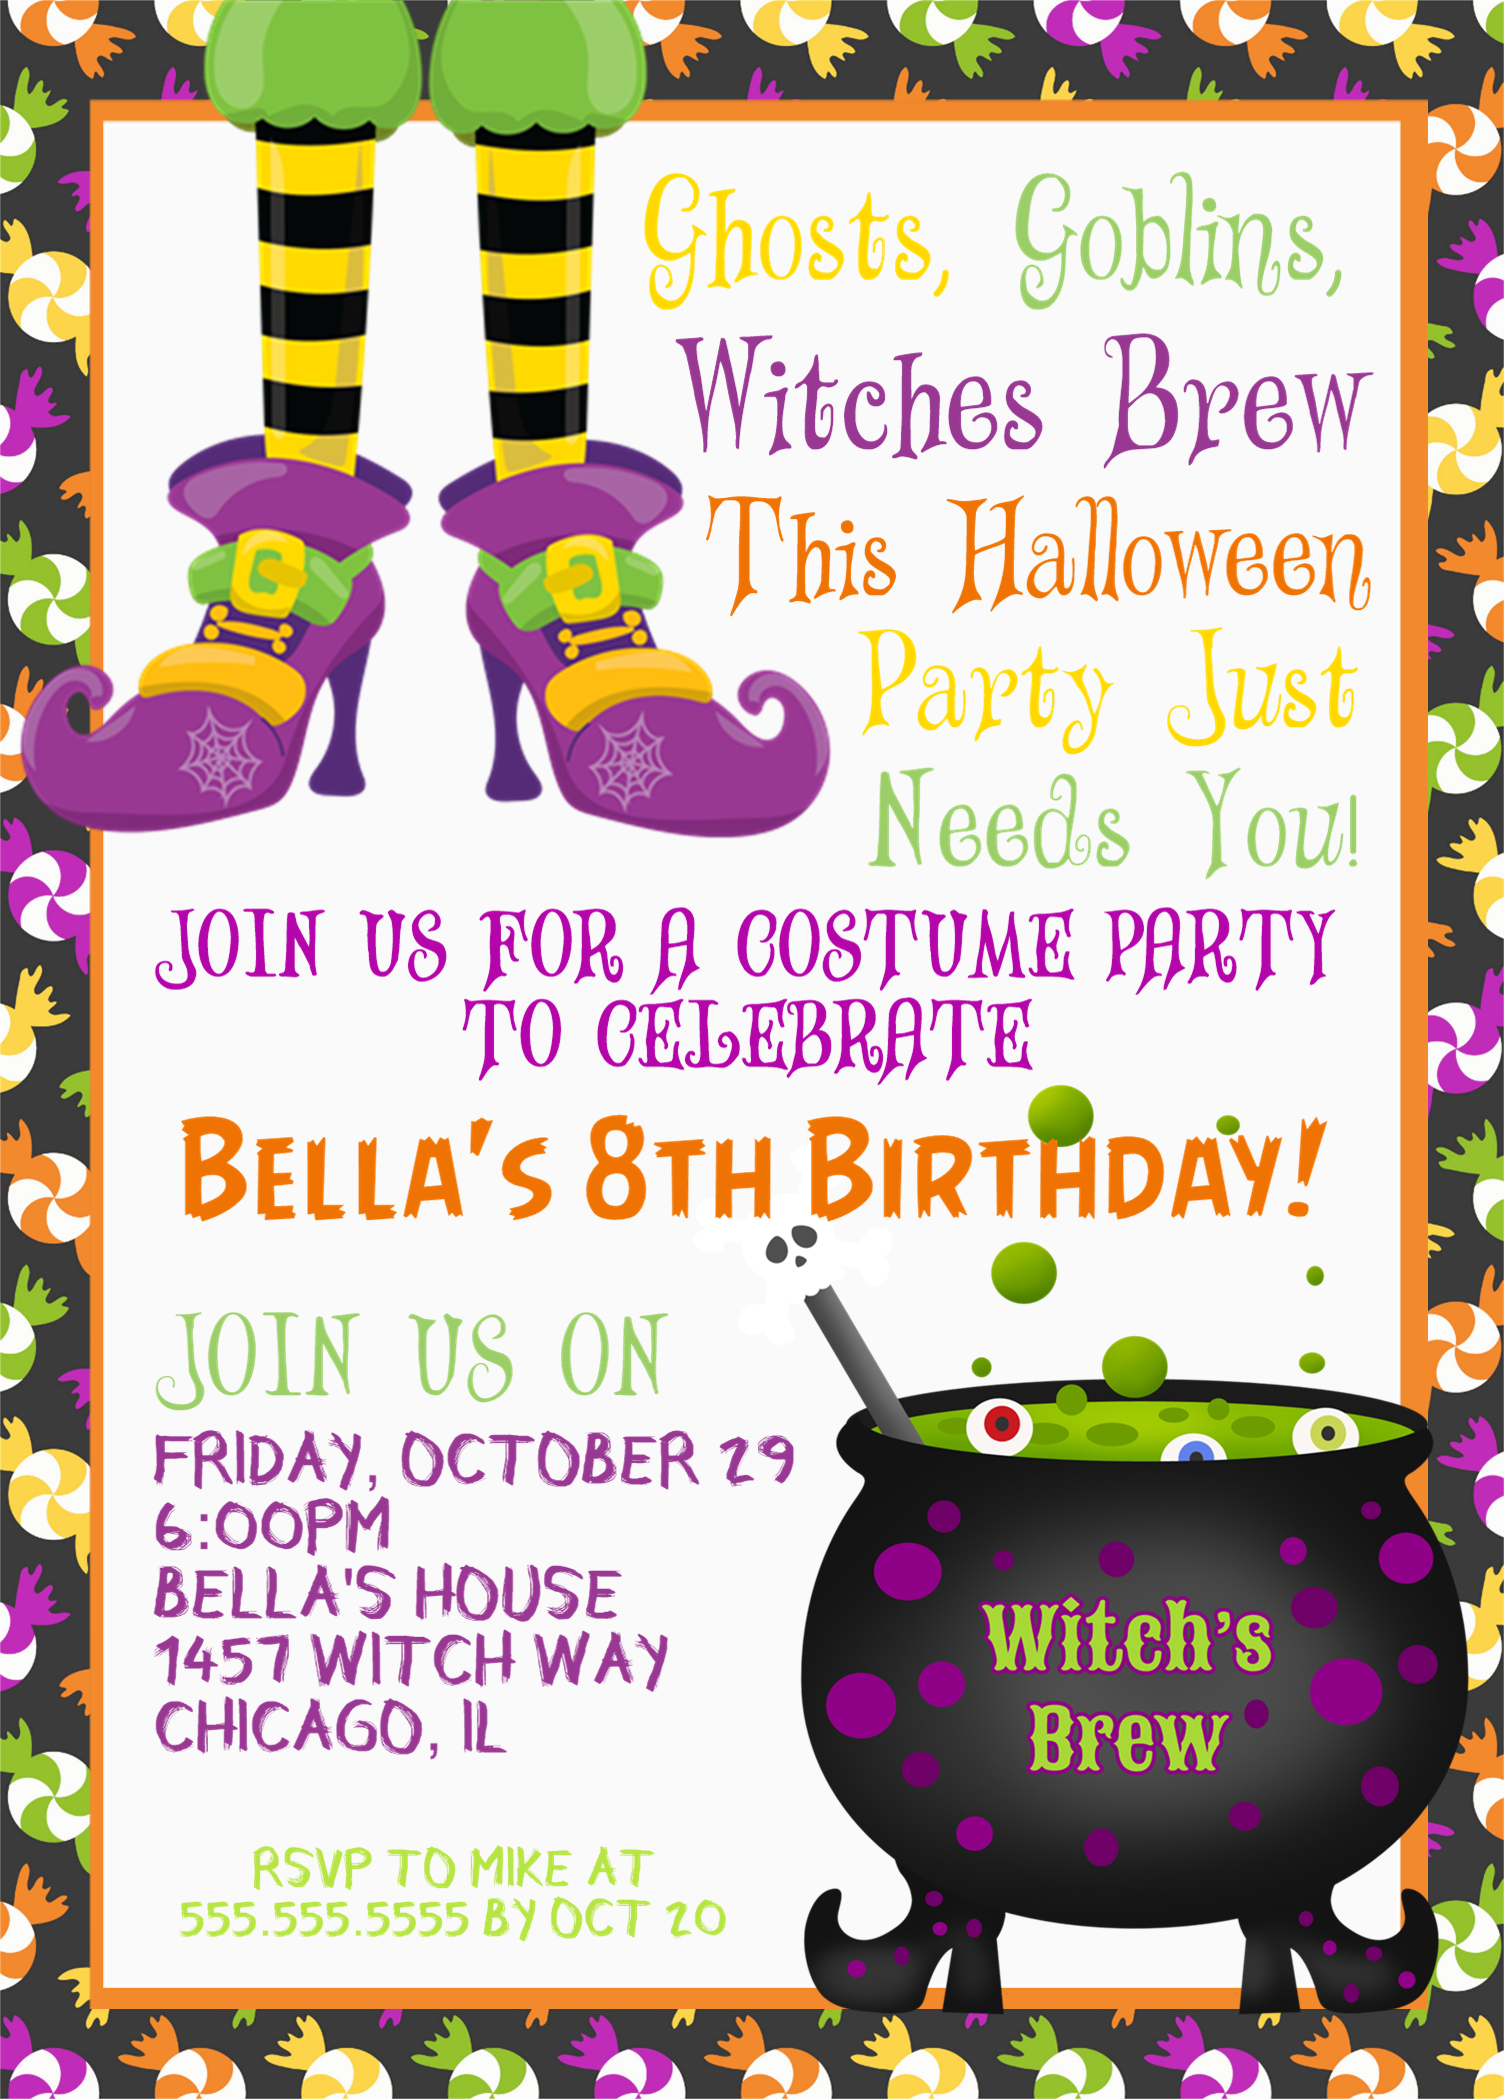 Halloween Birthday Party Invitations